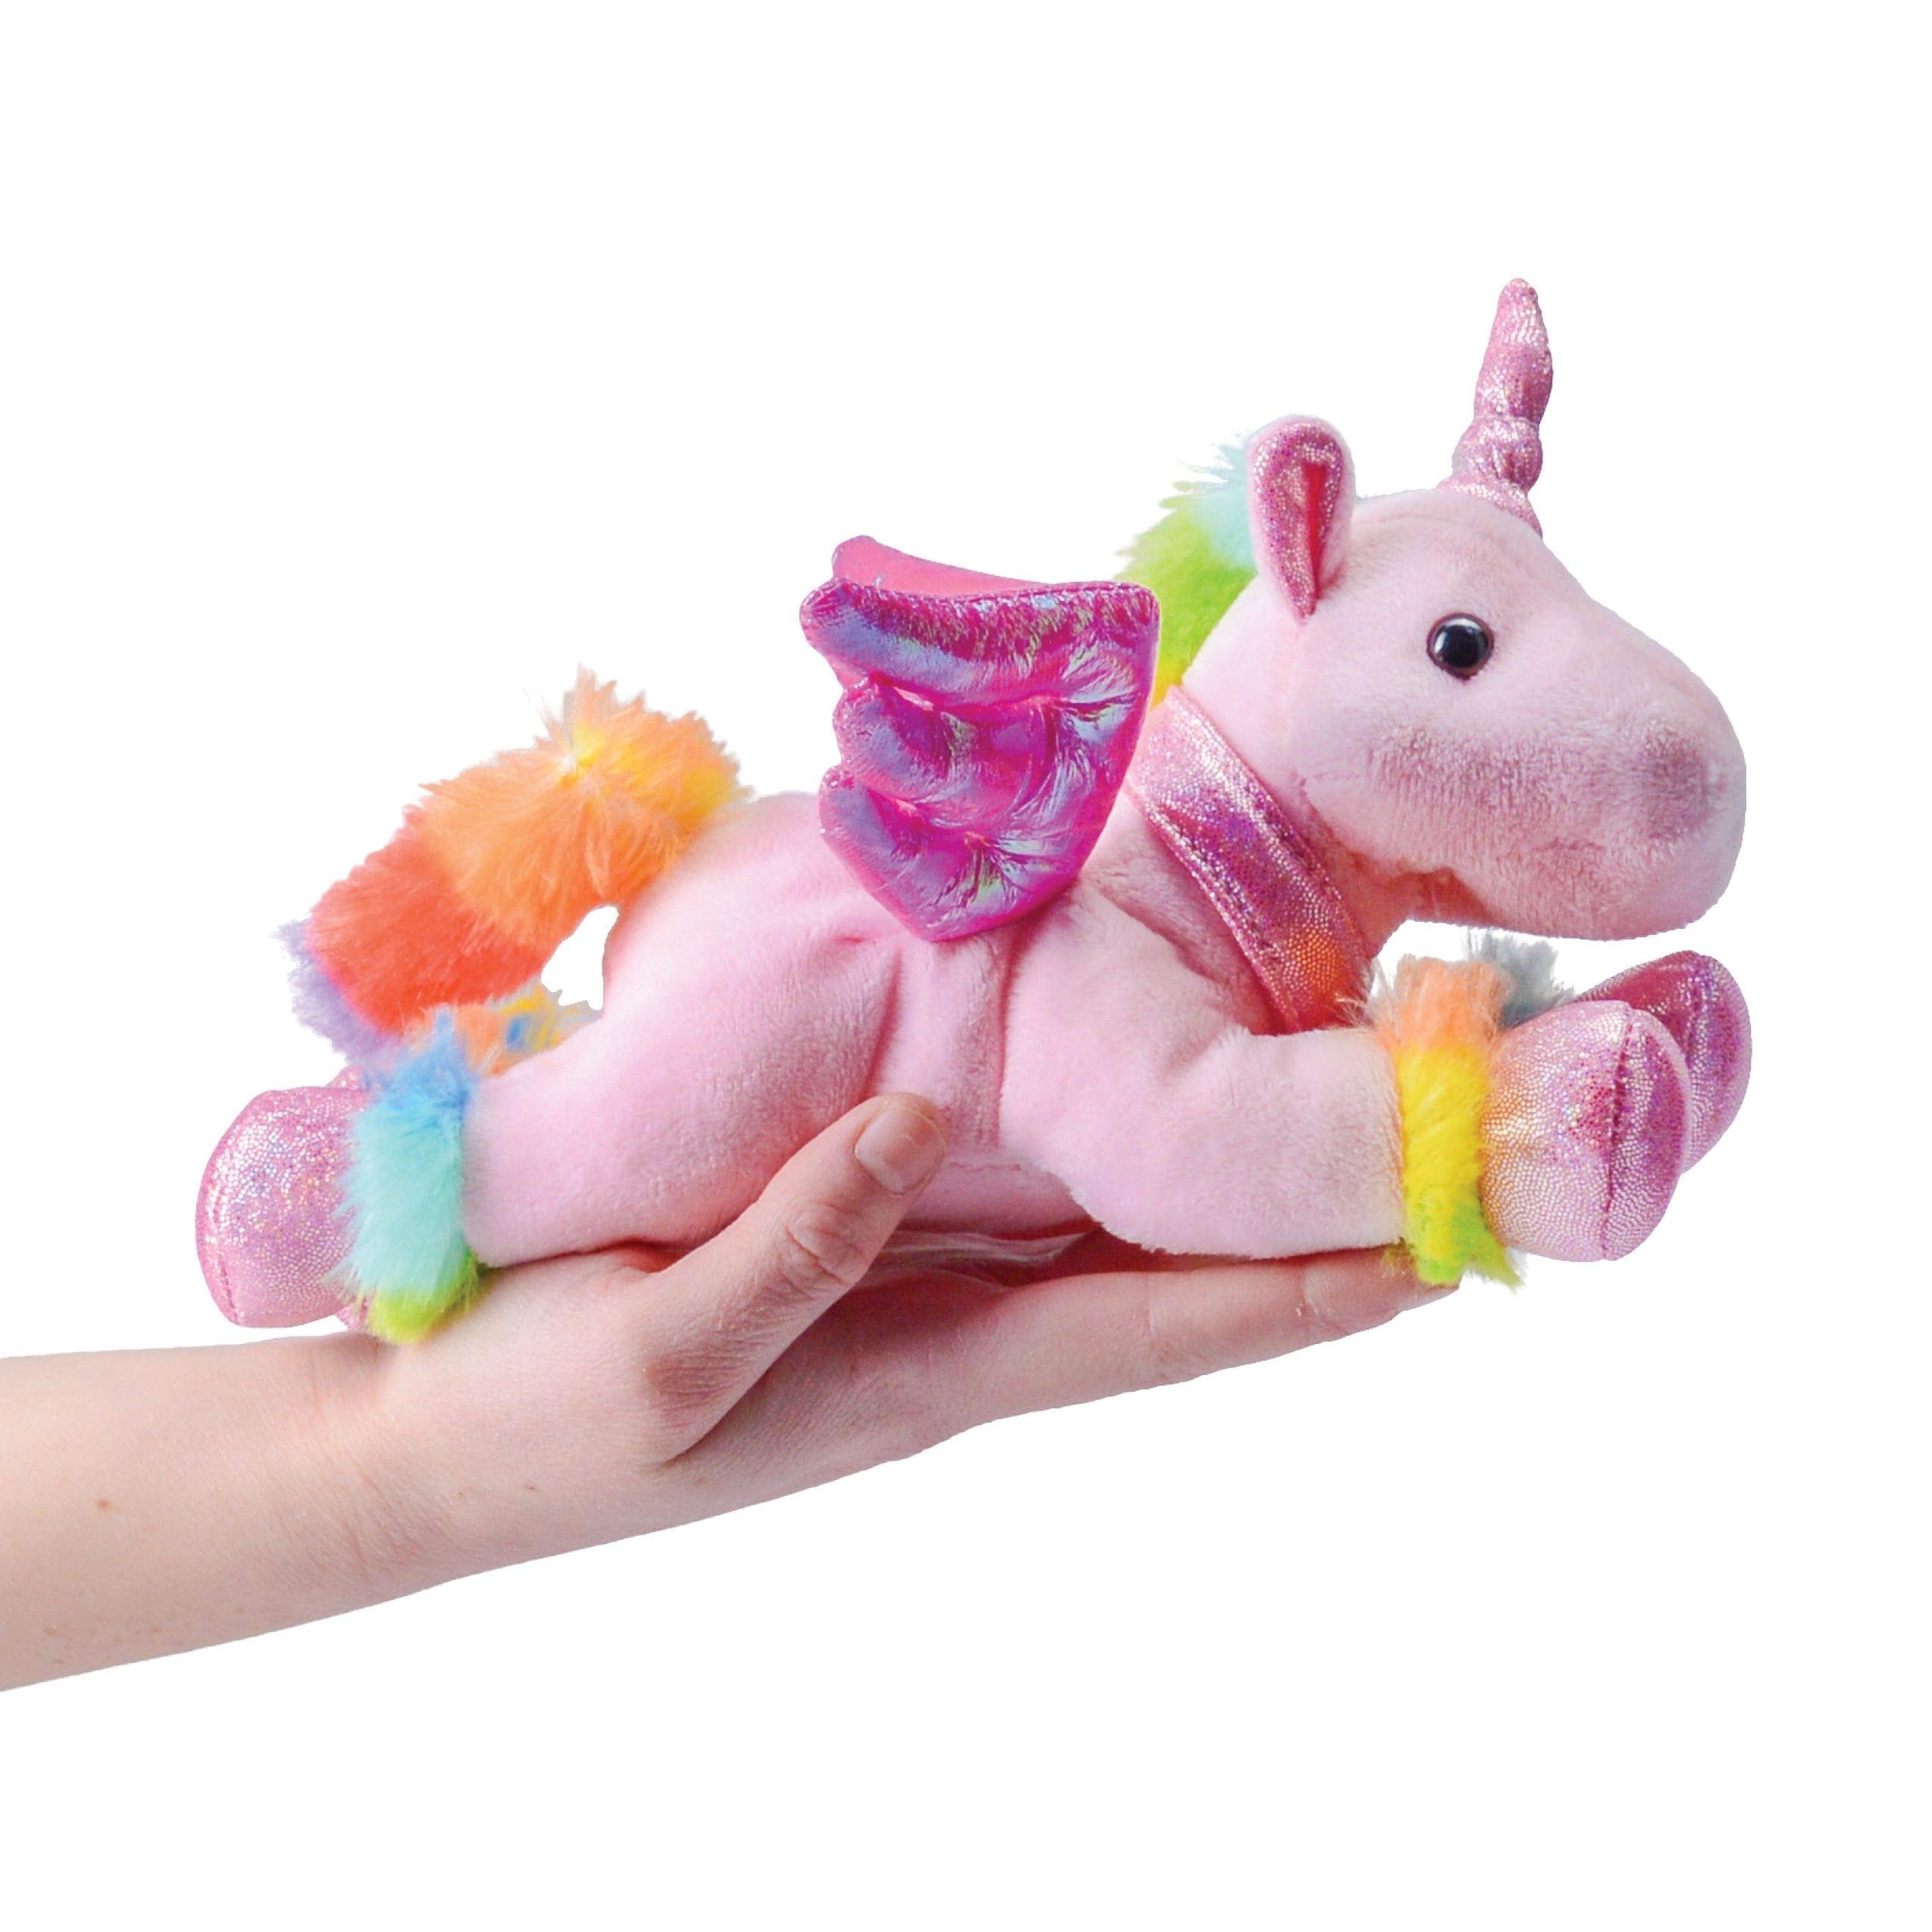 PREXTEX Unicorn Stuffed Animals (4 Cute Plush Unicorns Gifts for Girls), Machine Washable - Unicorn Toys for Girls & Boys Ages 3-5+